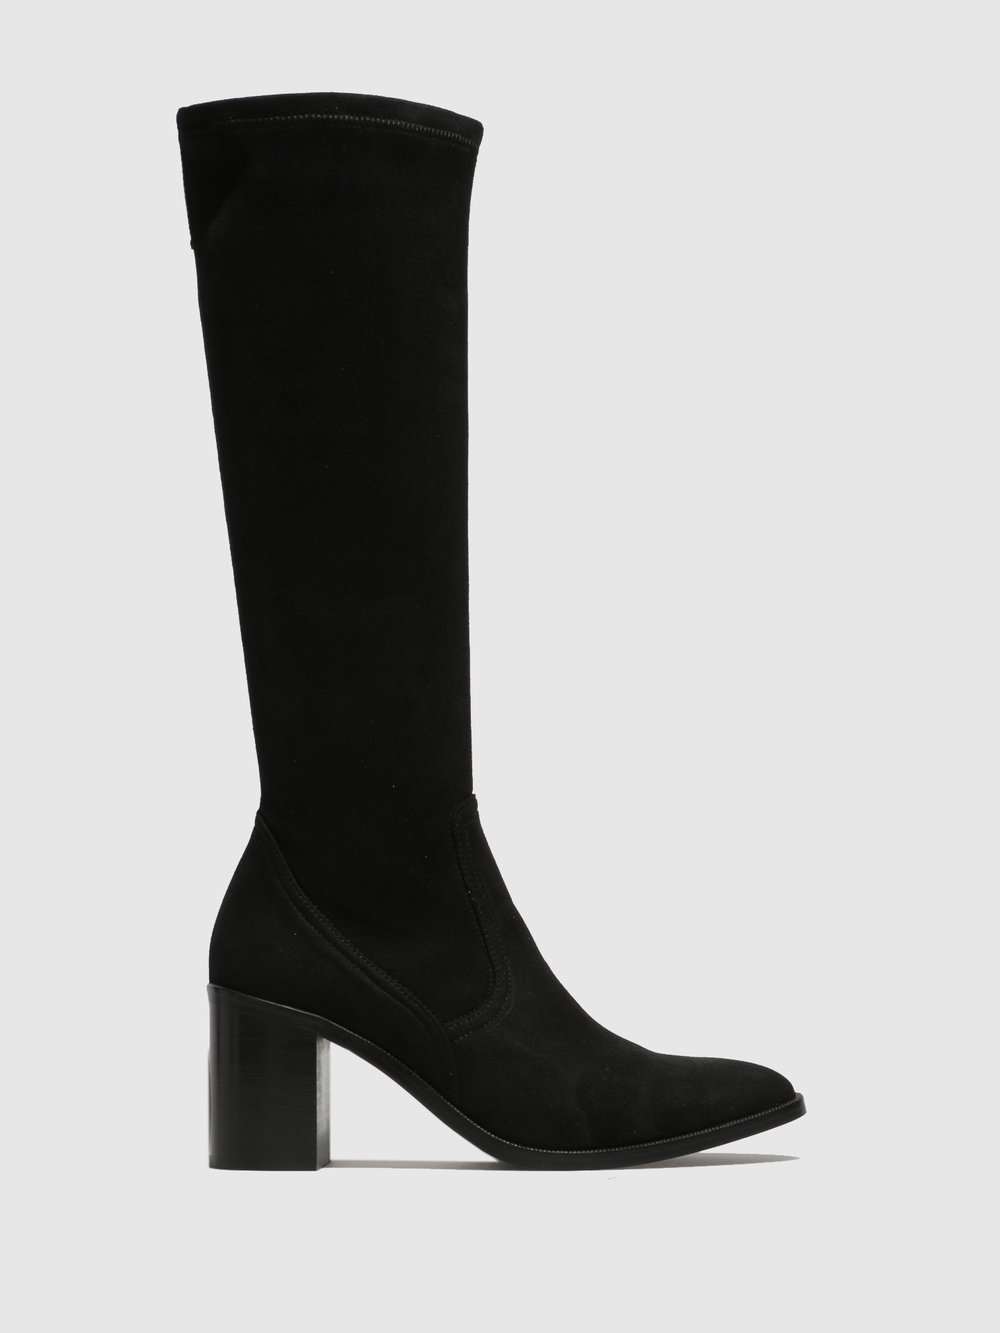 Foreva-Black-Boots_89,90€